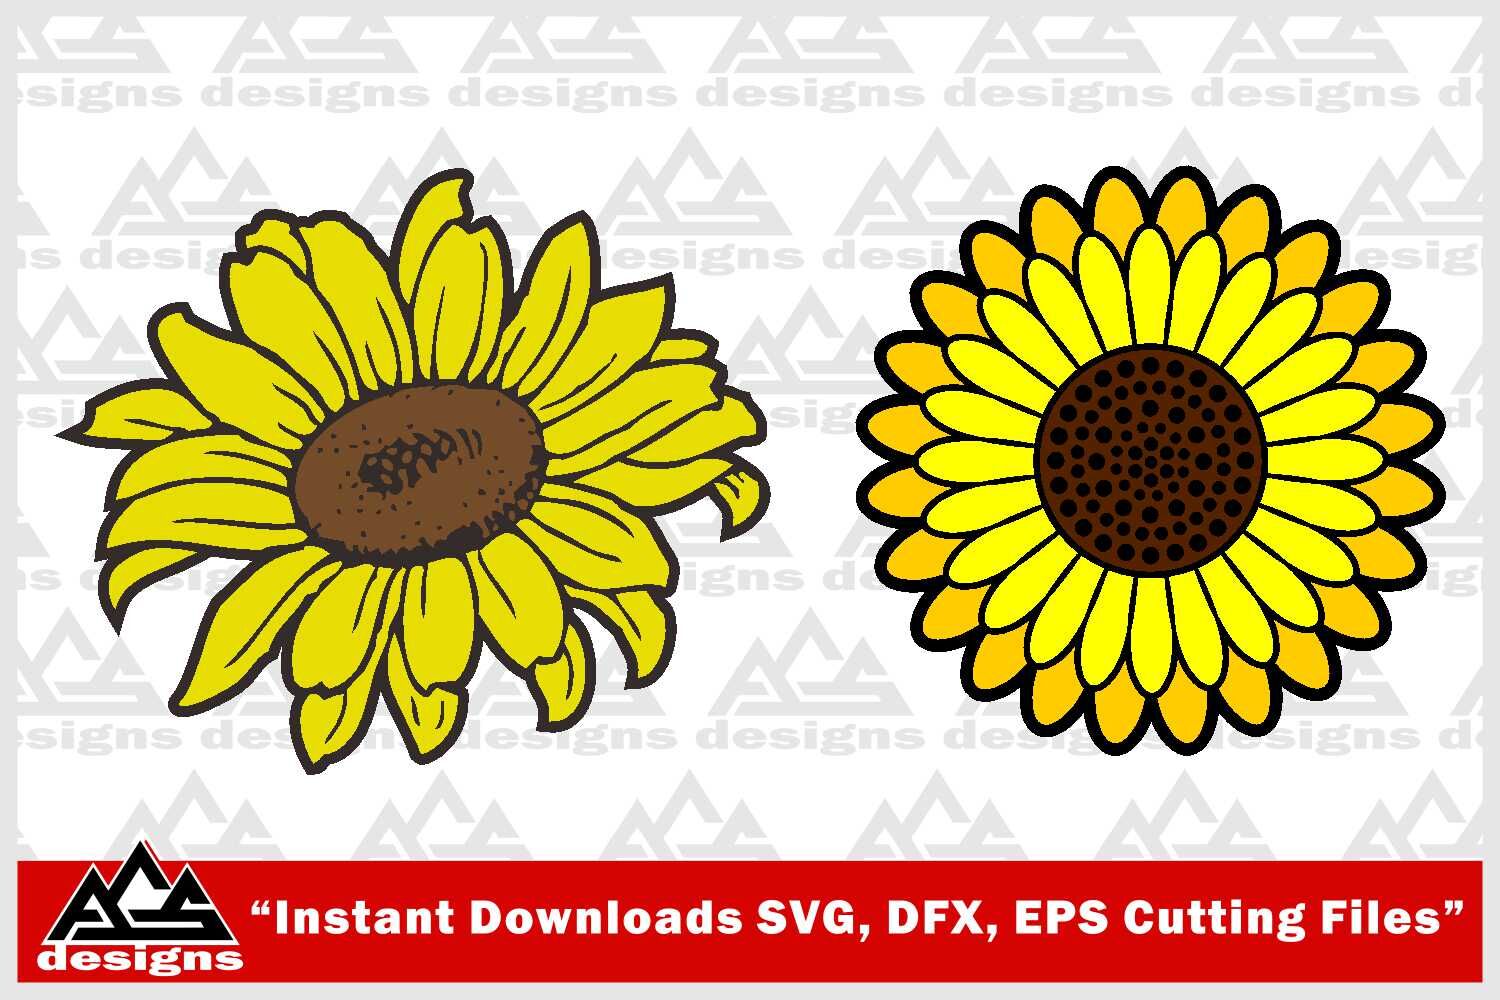 Download Free Svg Files 4th Of July Lovesvg Com Free Sunflower Svg Images